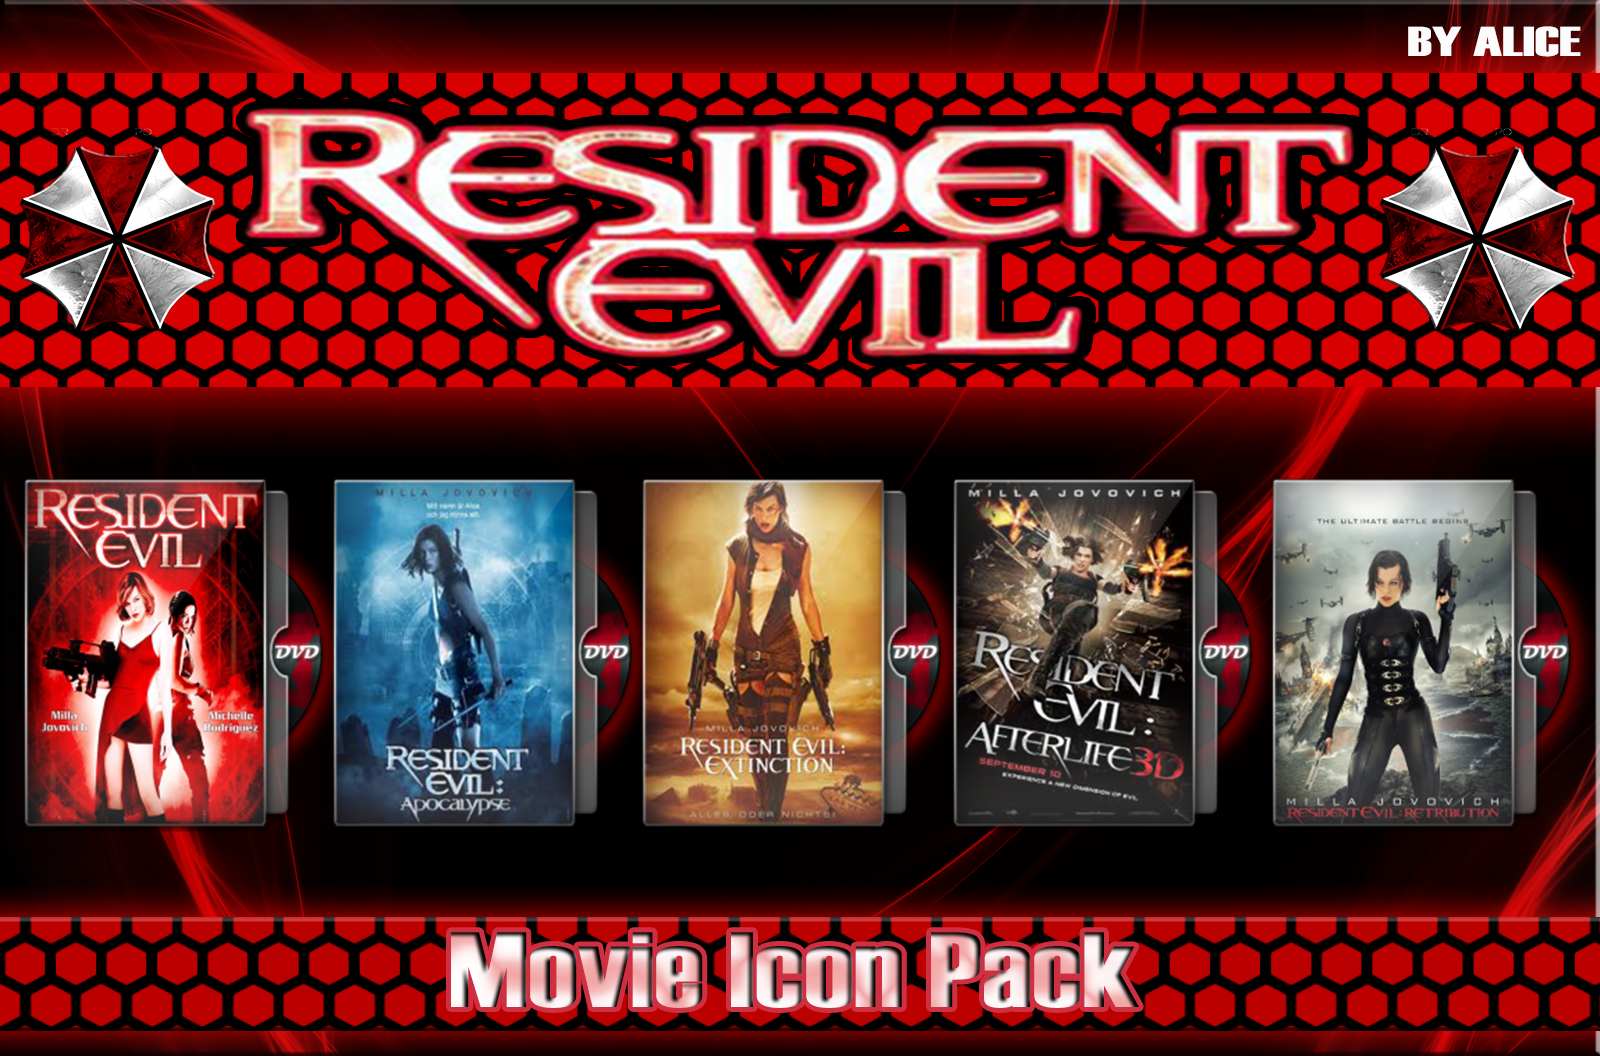 Resident Evil Movie Icon Pack by Alicegirl77 on DeviantArt